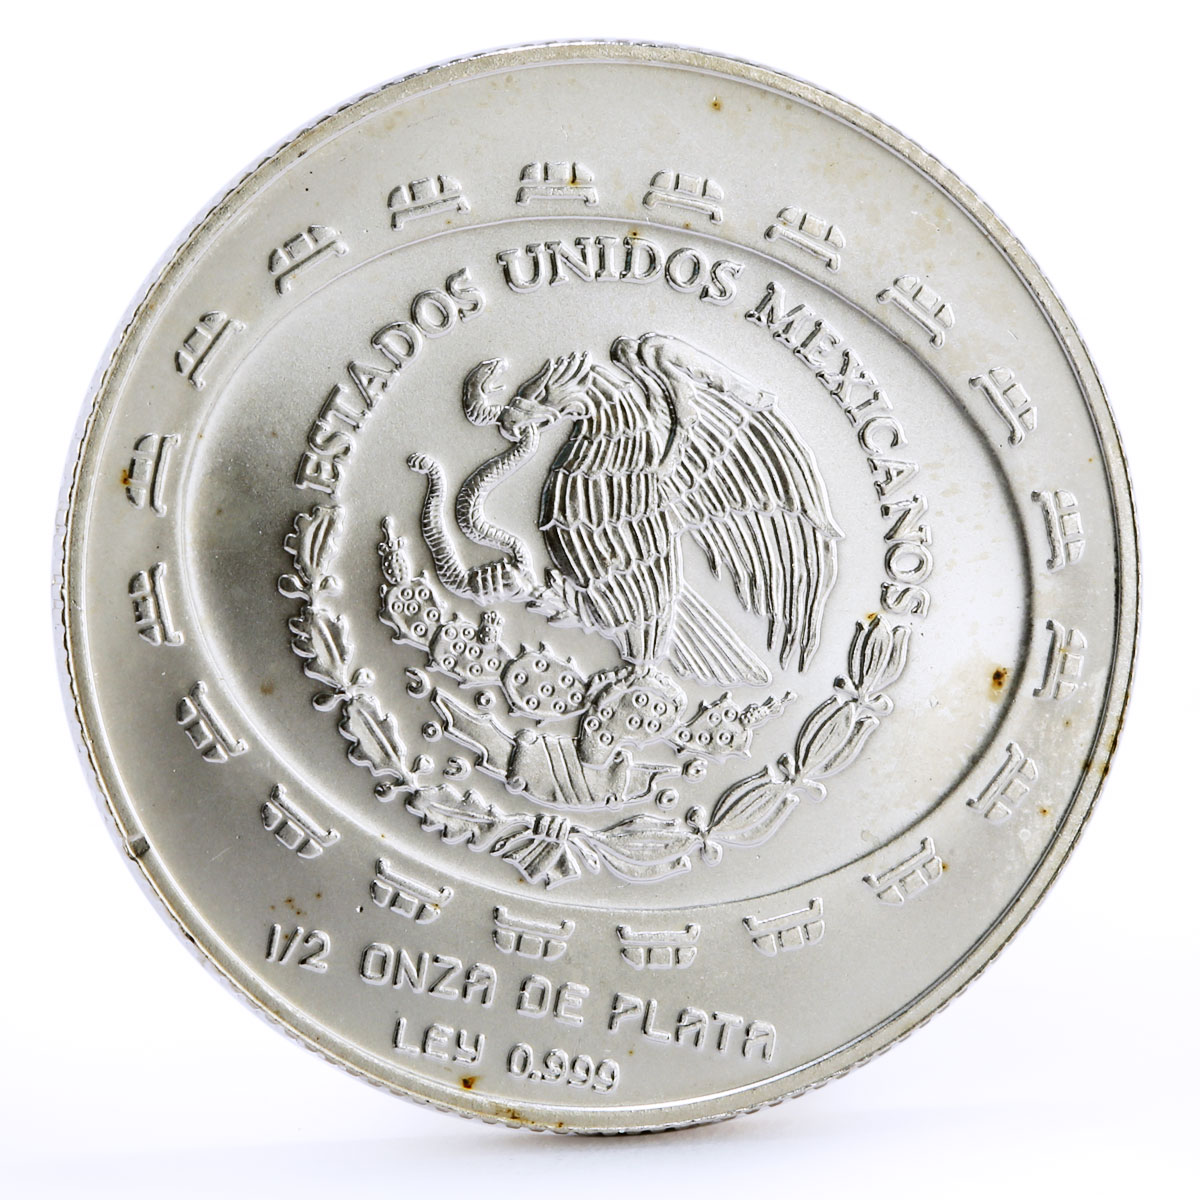 Mexico 2 pesos Disco De La Muerte silver coin 1998